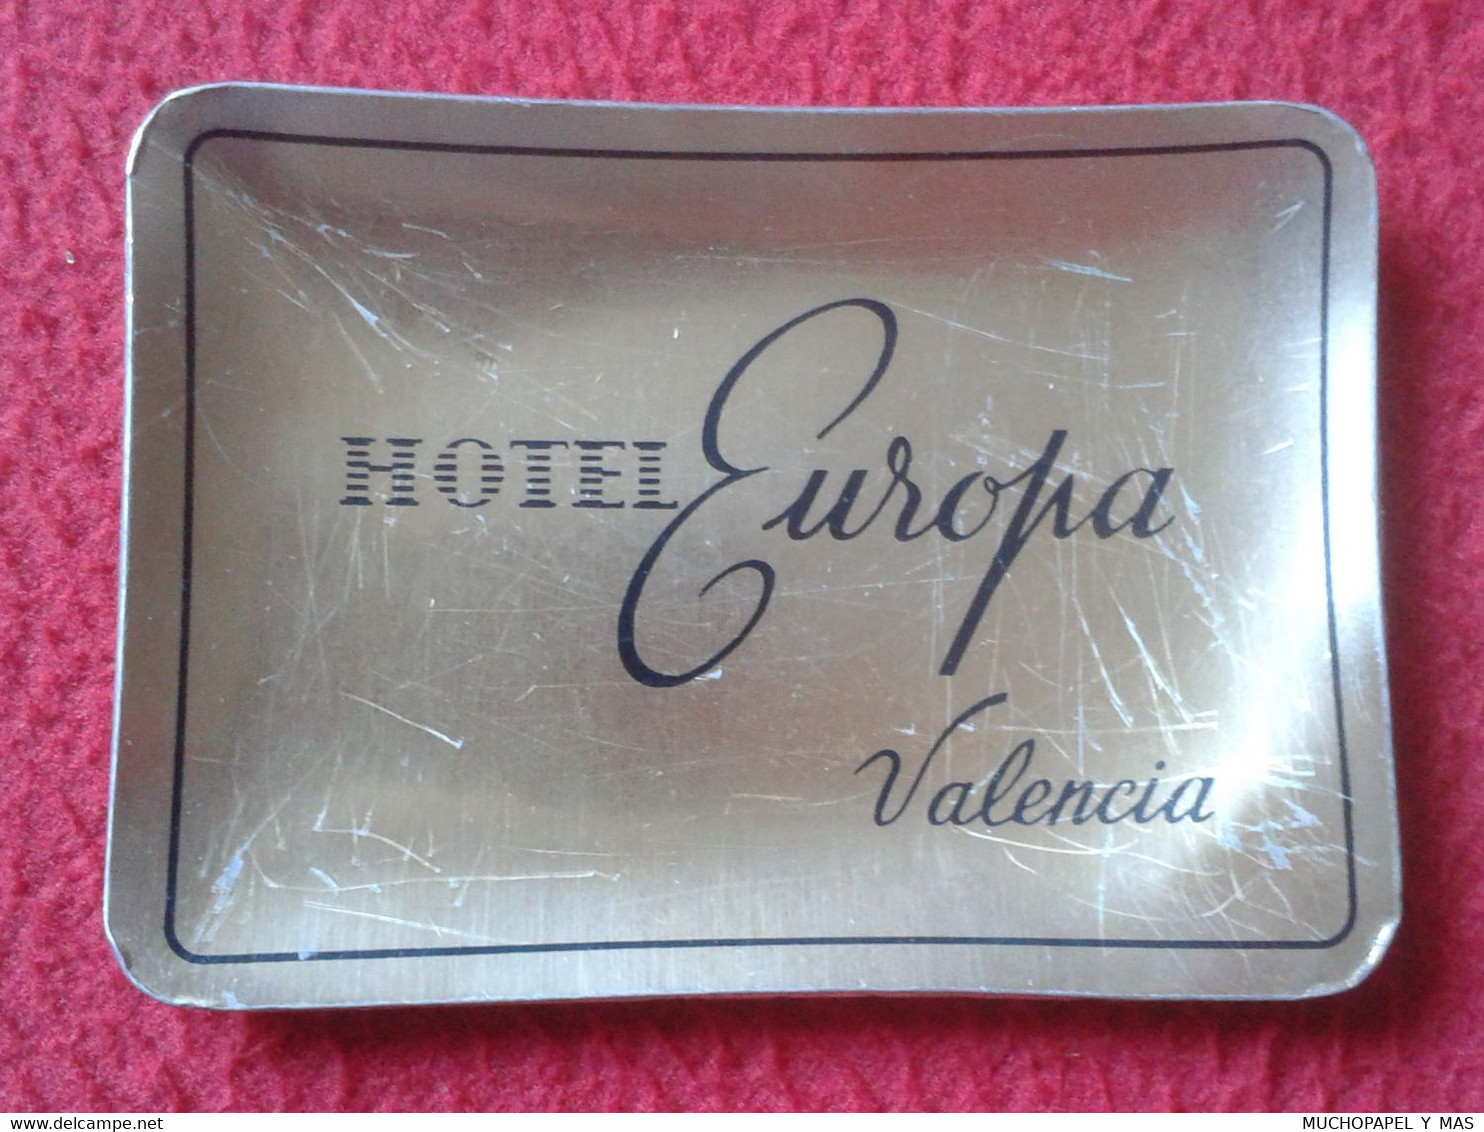 ANTIGUO CENICERO ASHTRAY CENDRIER HOTEL EUROPA VALENCIA ESPAÑA SPAIN MATERIAL TIPO ALUMINIO O SIMIL ASCHENBECHER ESPAGNE - Metall